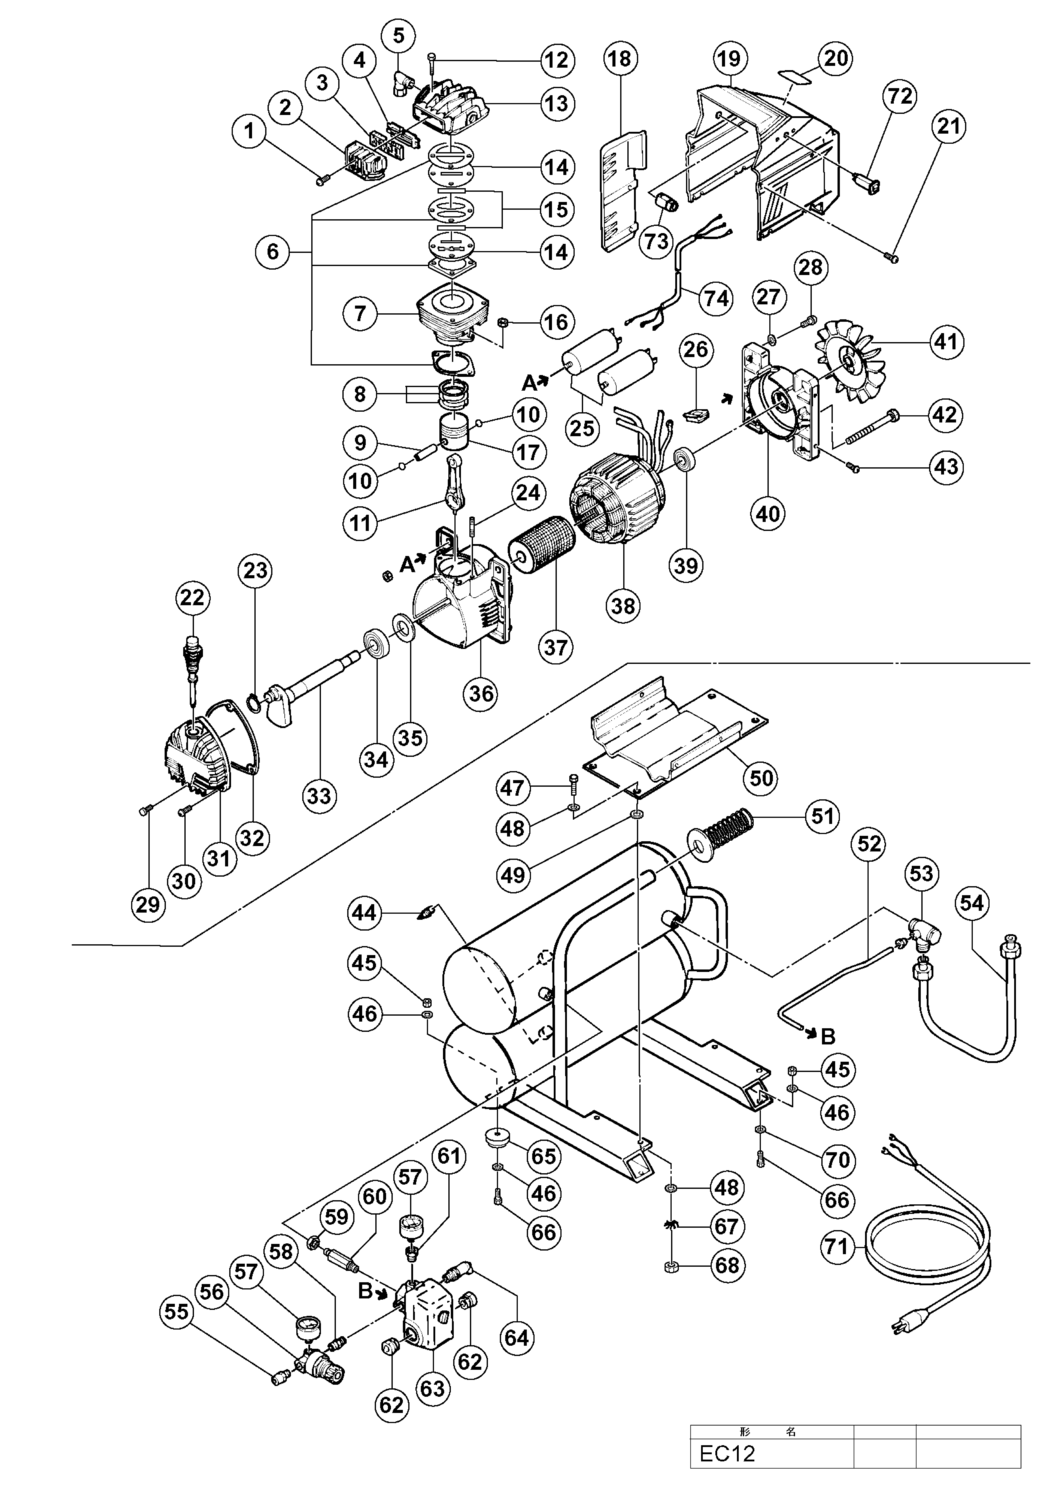 Hitachi / Hikoki EC12 Air Compressor Spare Parts